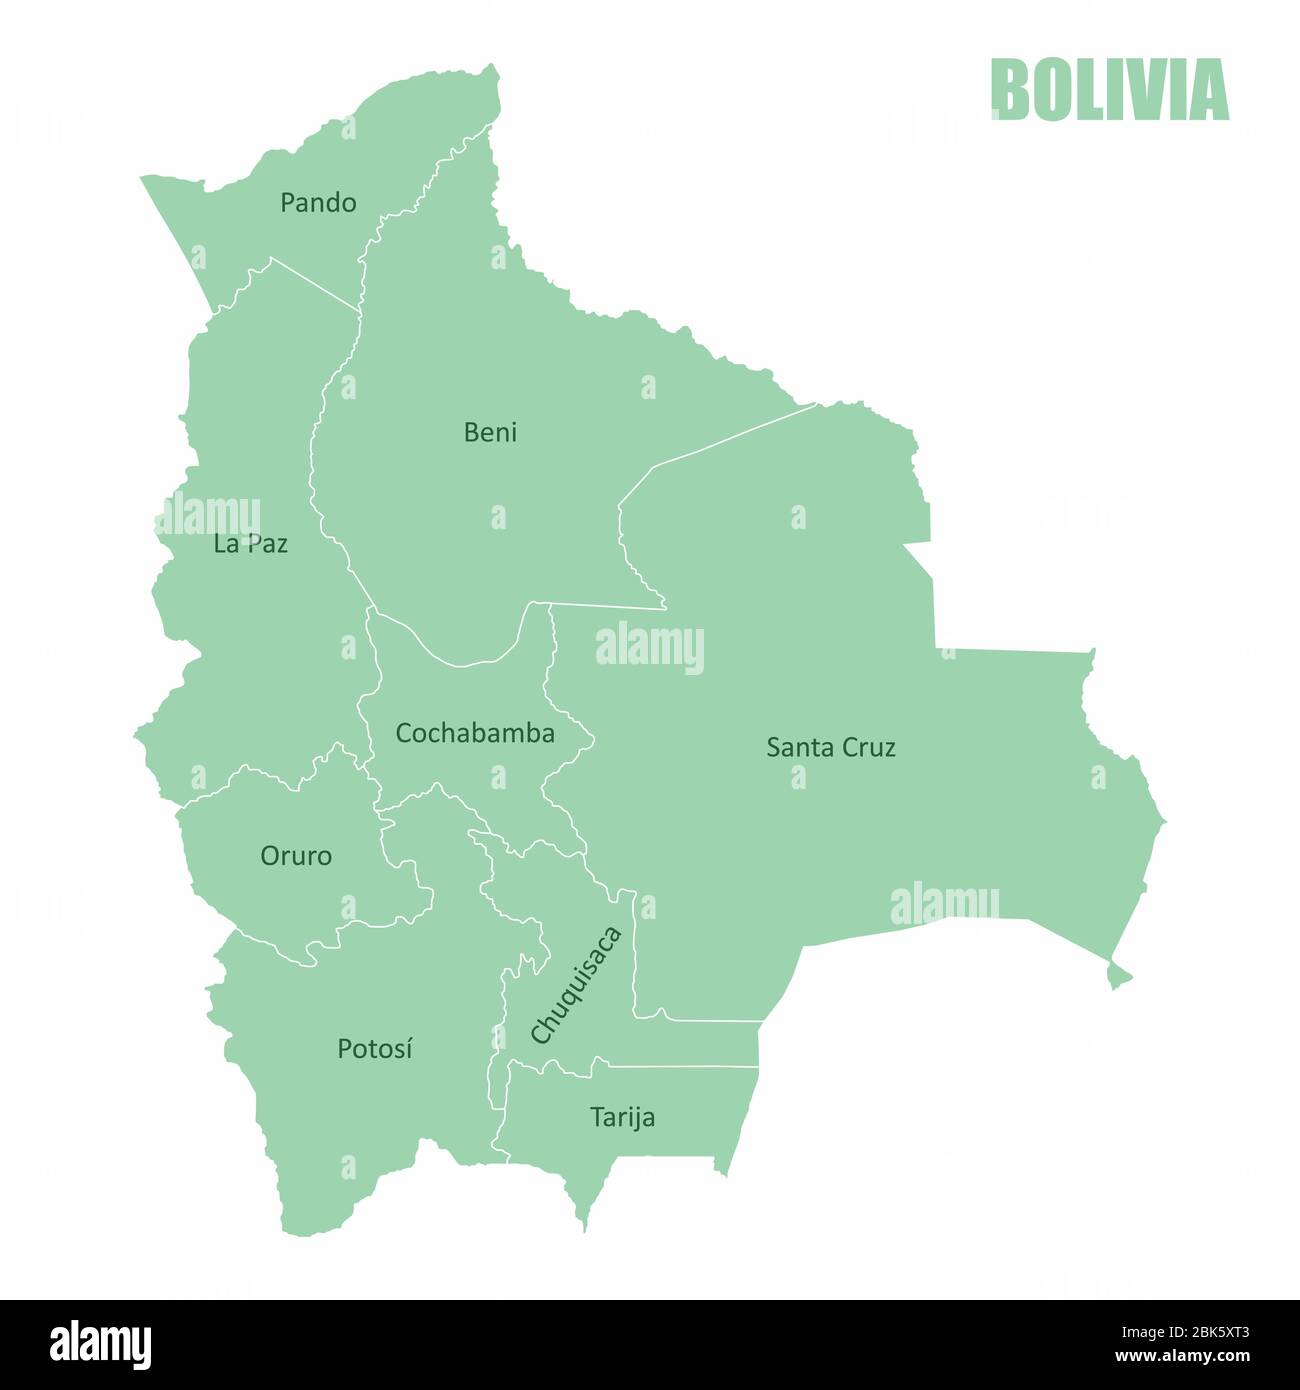 Bolivia regions map Stock Vector